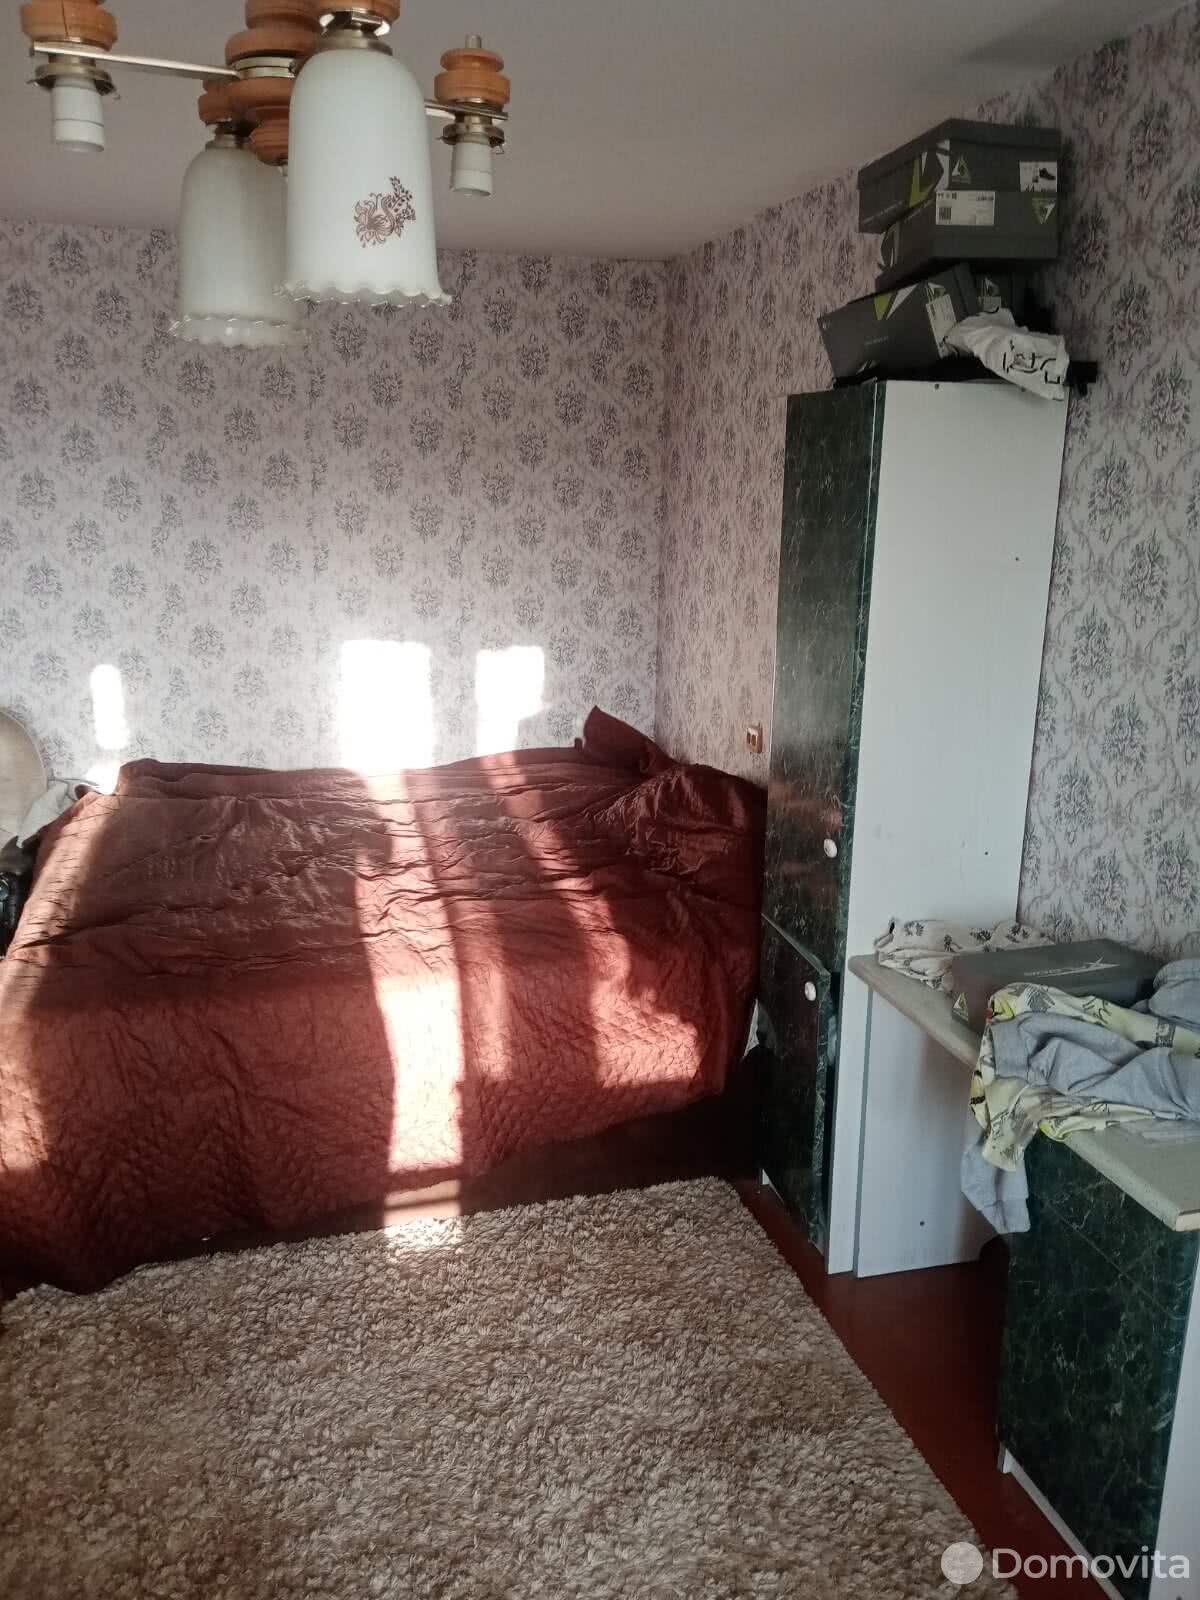 квартира, Гродно, ул. Поповича, д. 36, стоимость аренды 439 р./мес.